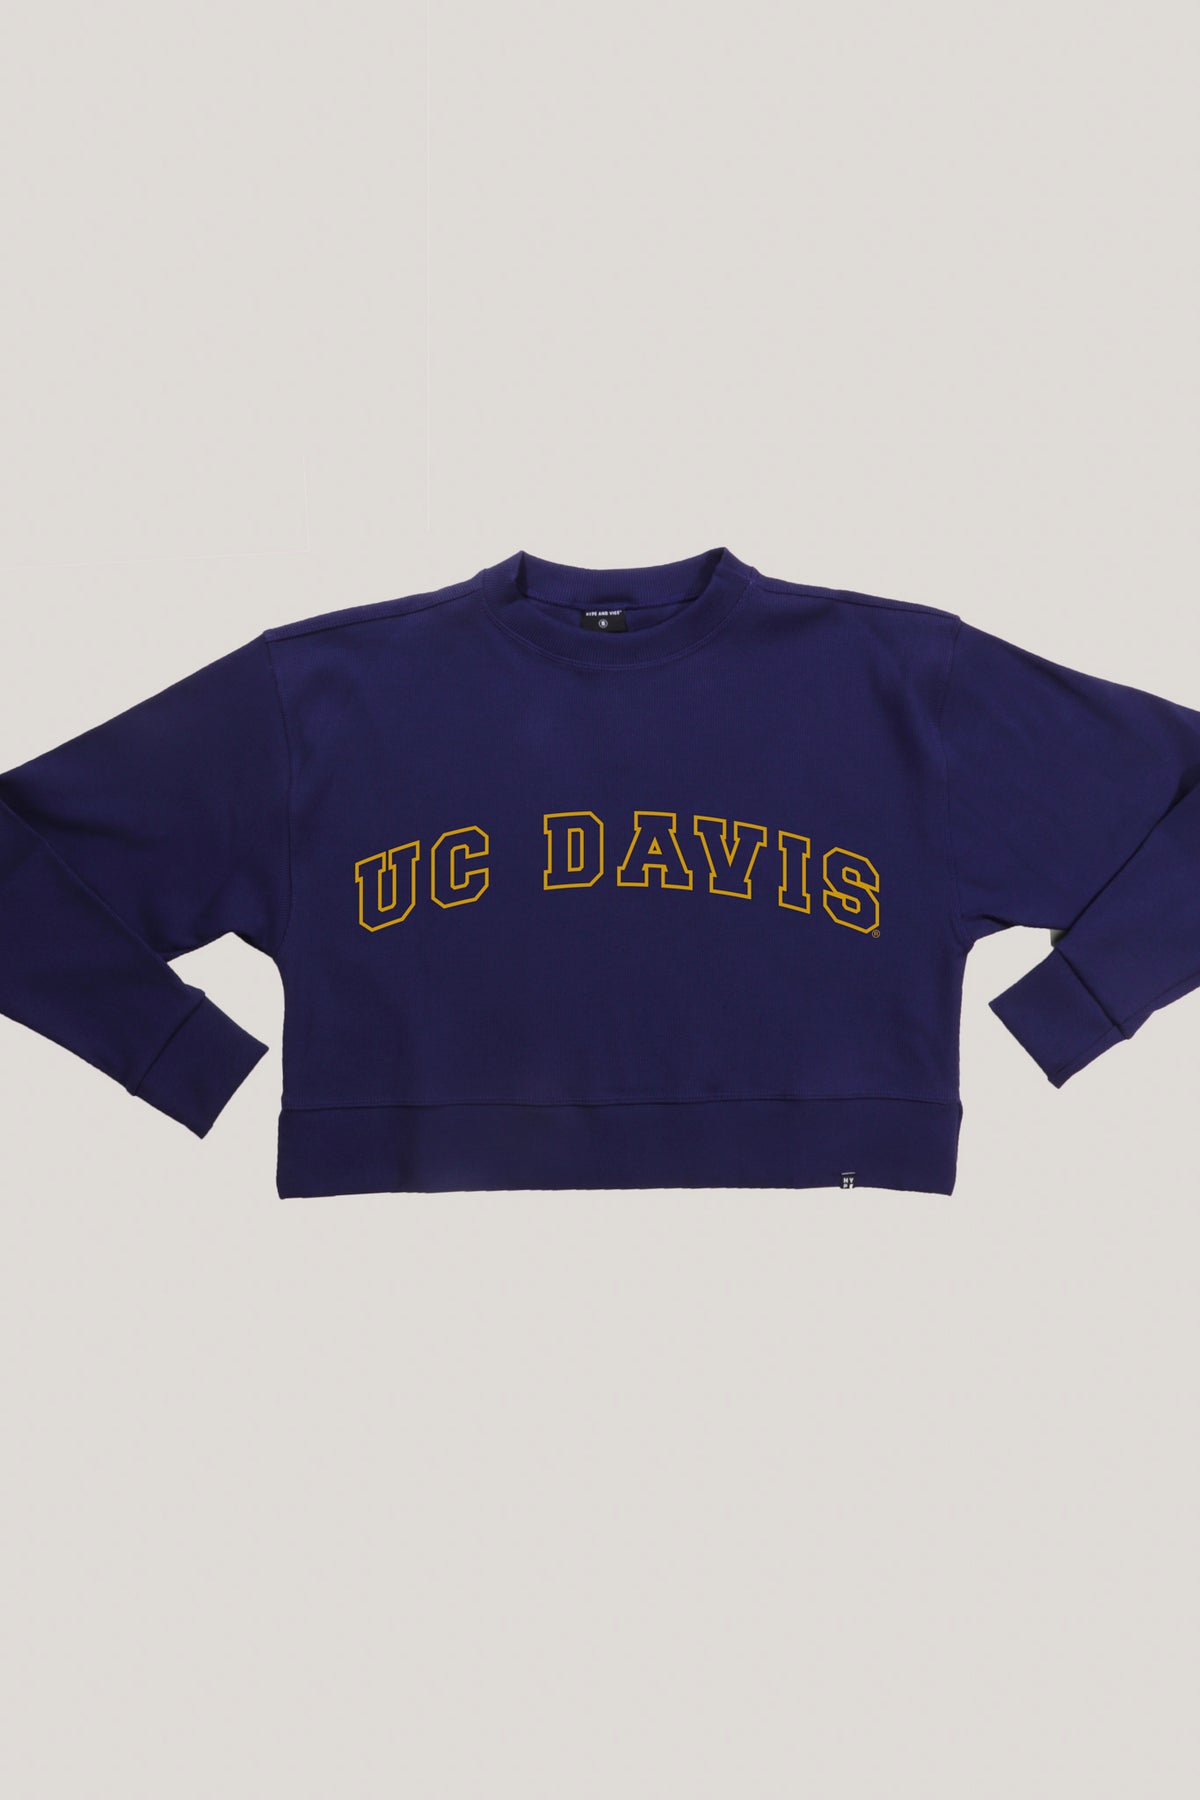 UC Davis Homecoming Crew